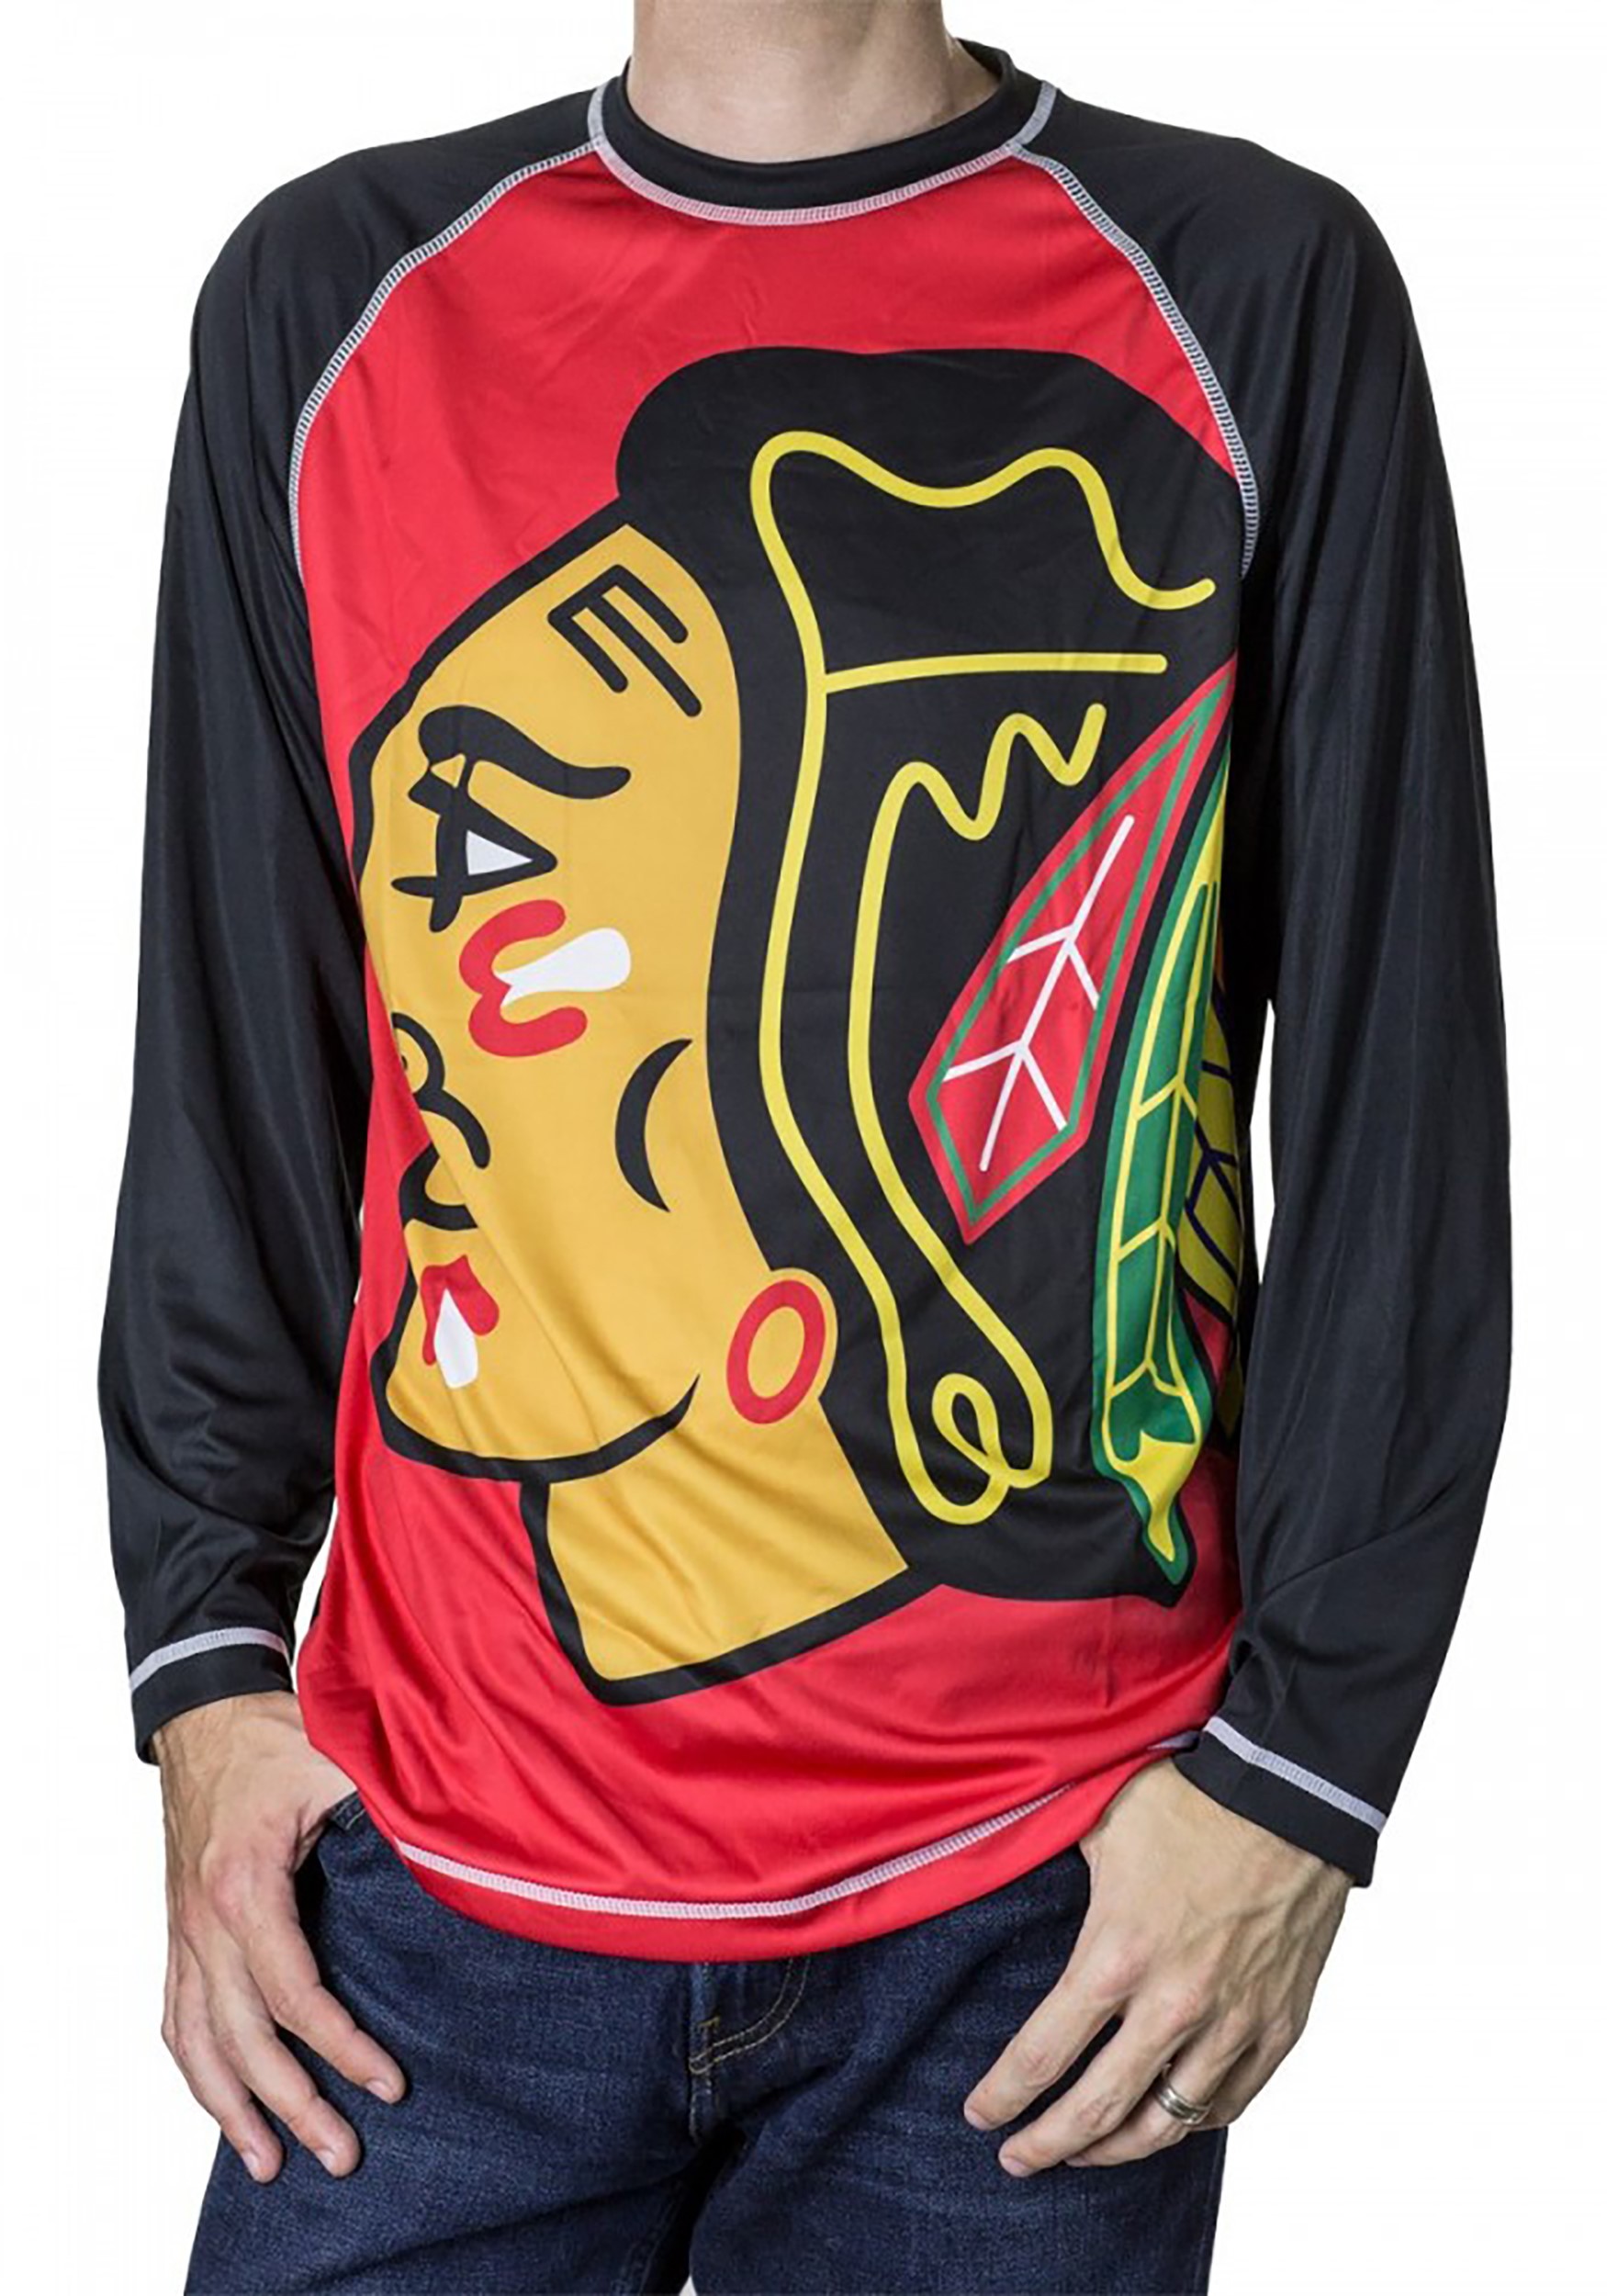 Reebok NHL Hockey Men's Chicago Blackhawks Long Sleeve Thermal Shirt - Maroon